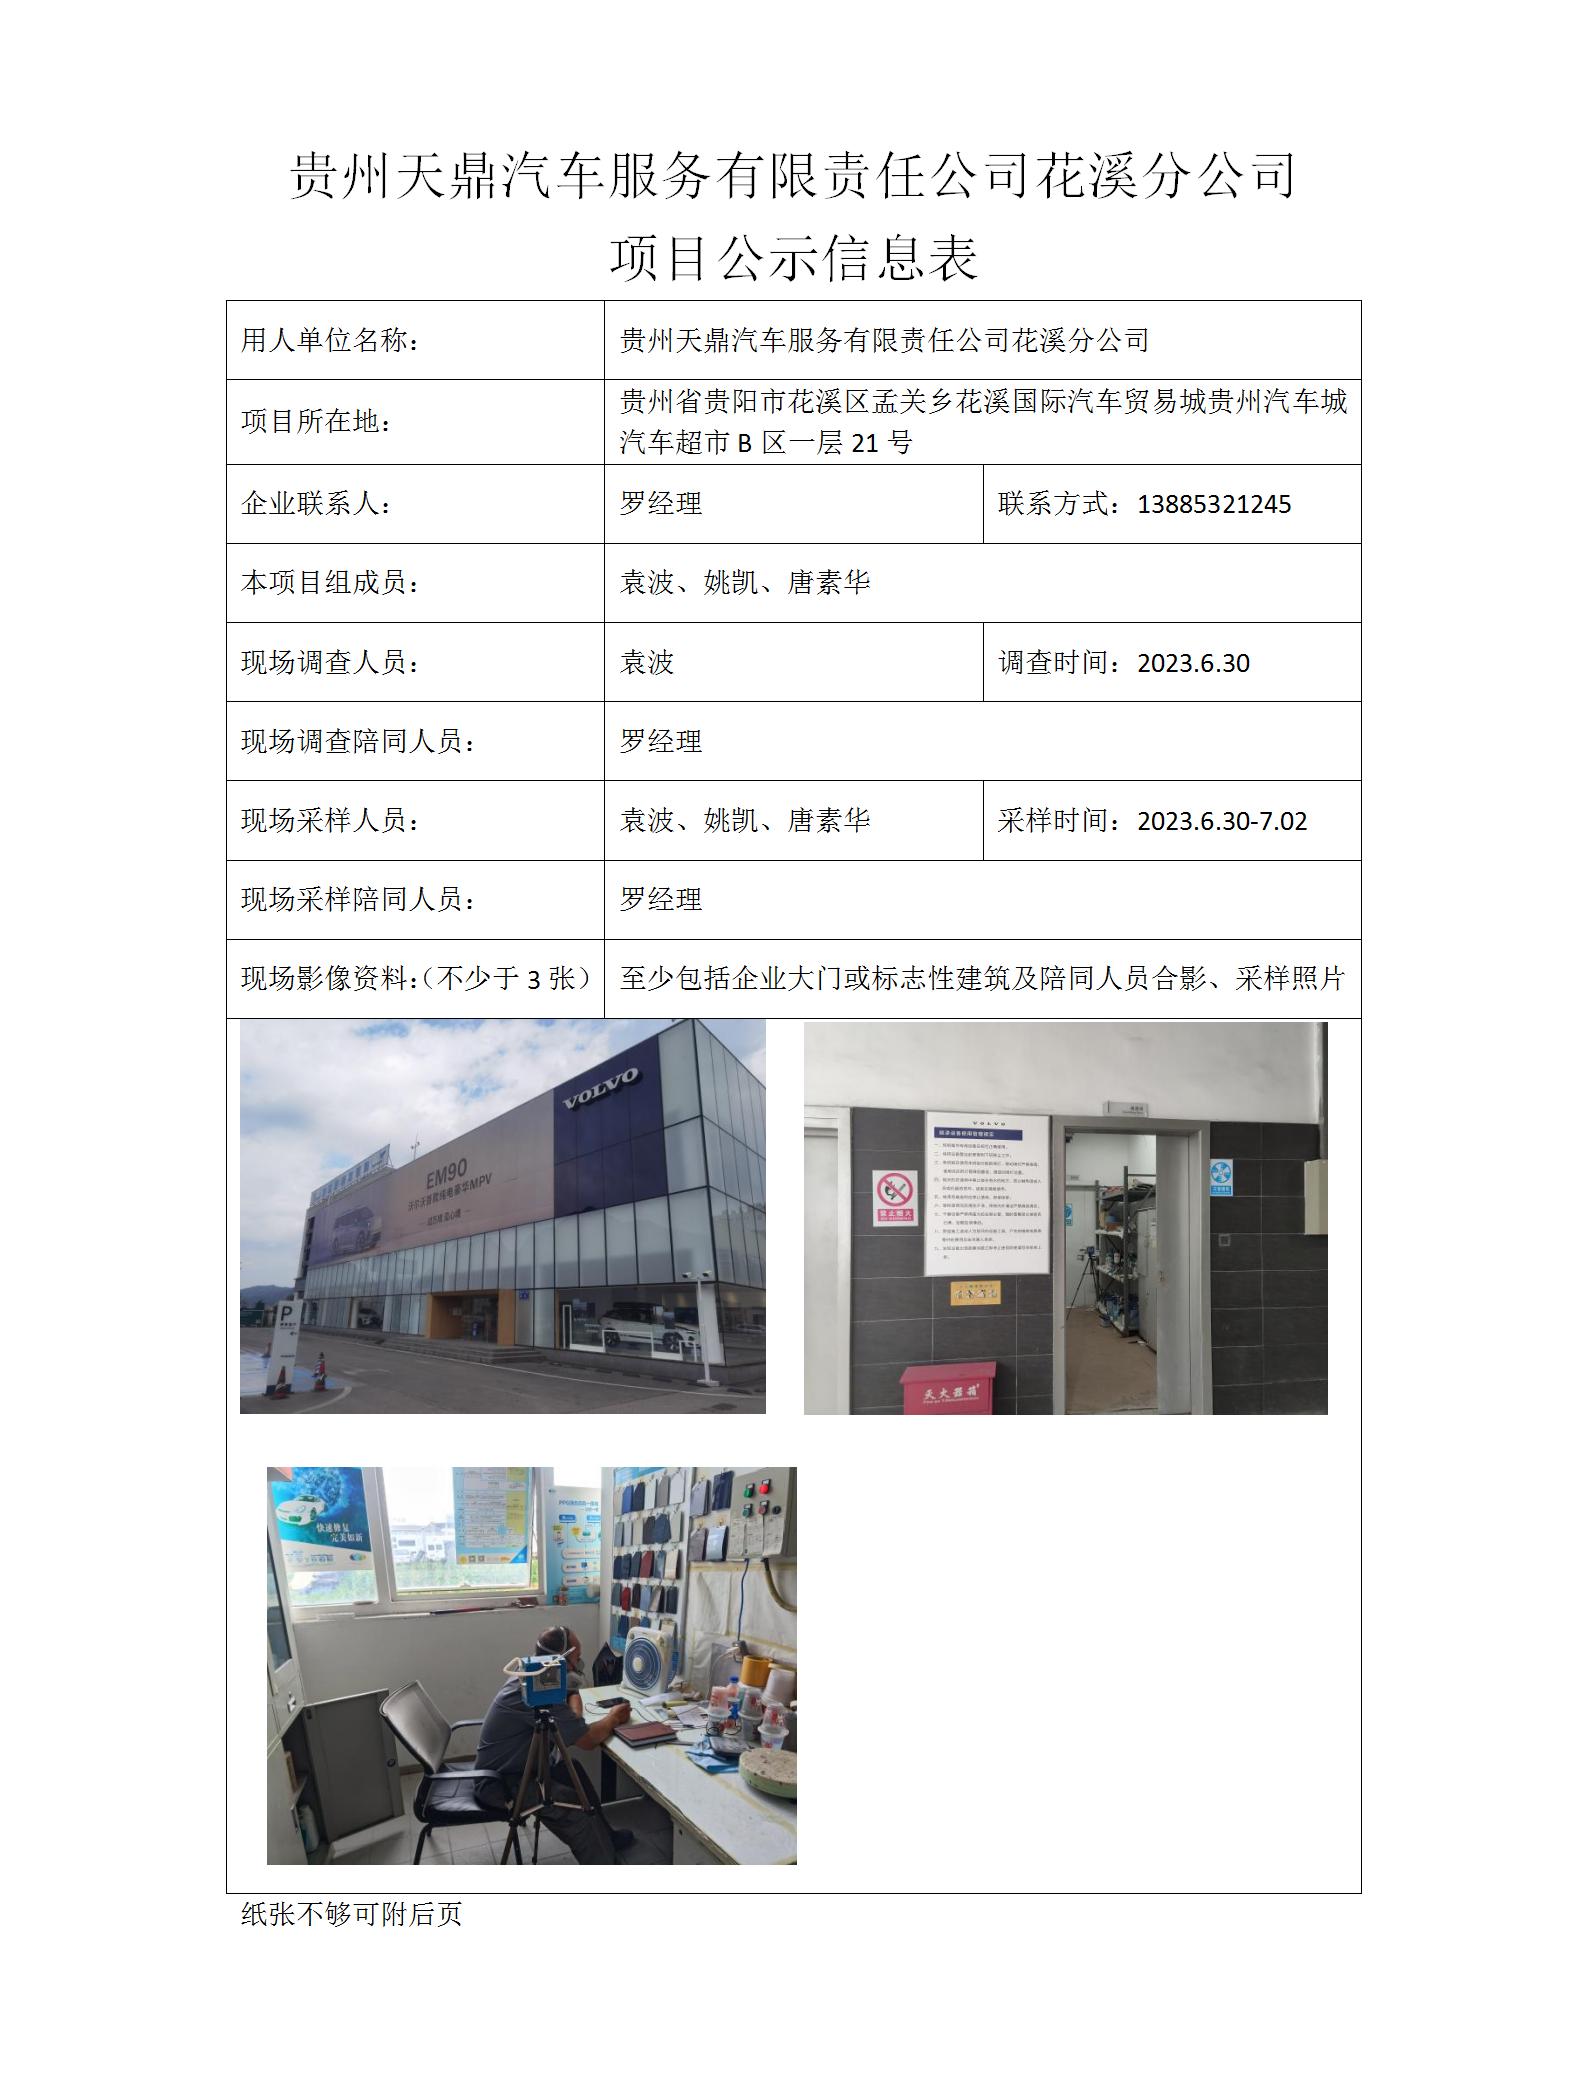 MD2023-0155（XP-F）贵州天鼎汽车销售服务有限公司（孟关店）项目公示信息表_01.jpg